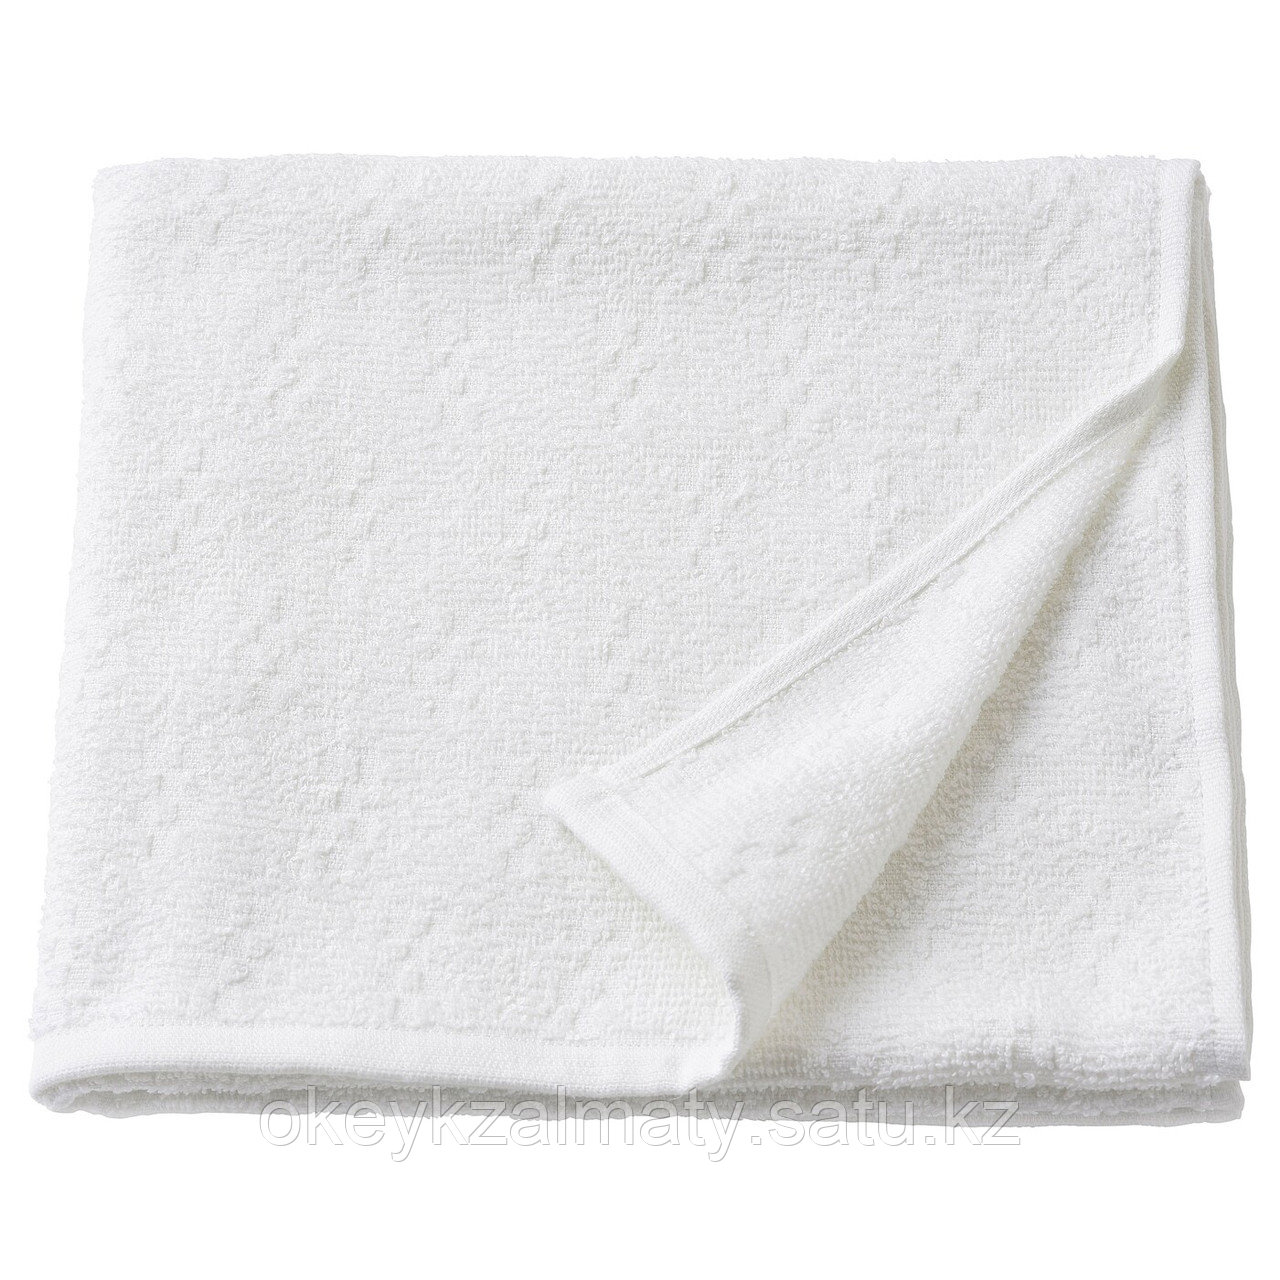 IKEA: Банное полотенце, белый, 55x120 см Närsen Нэрсен 104.473.59